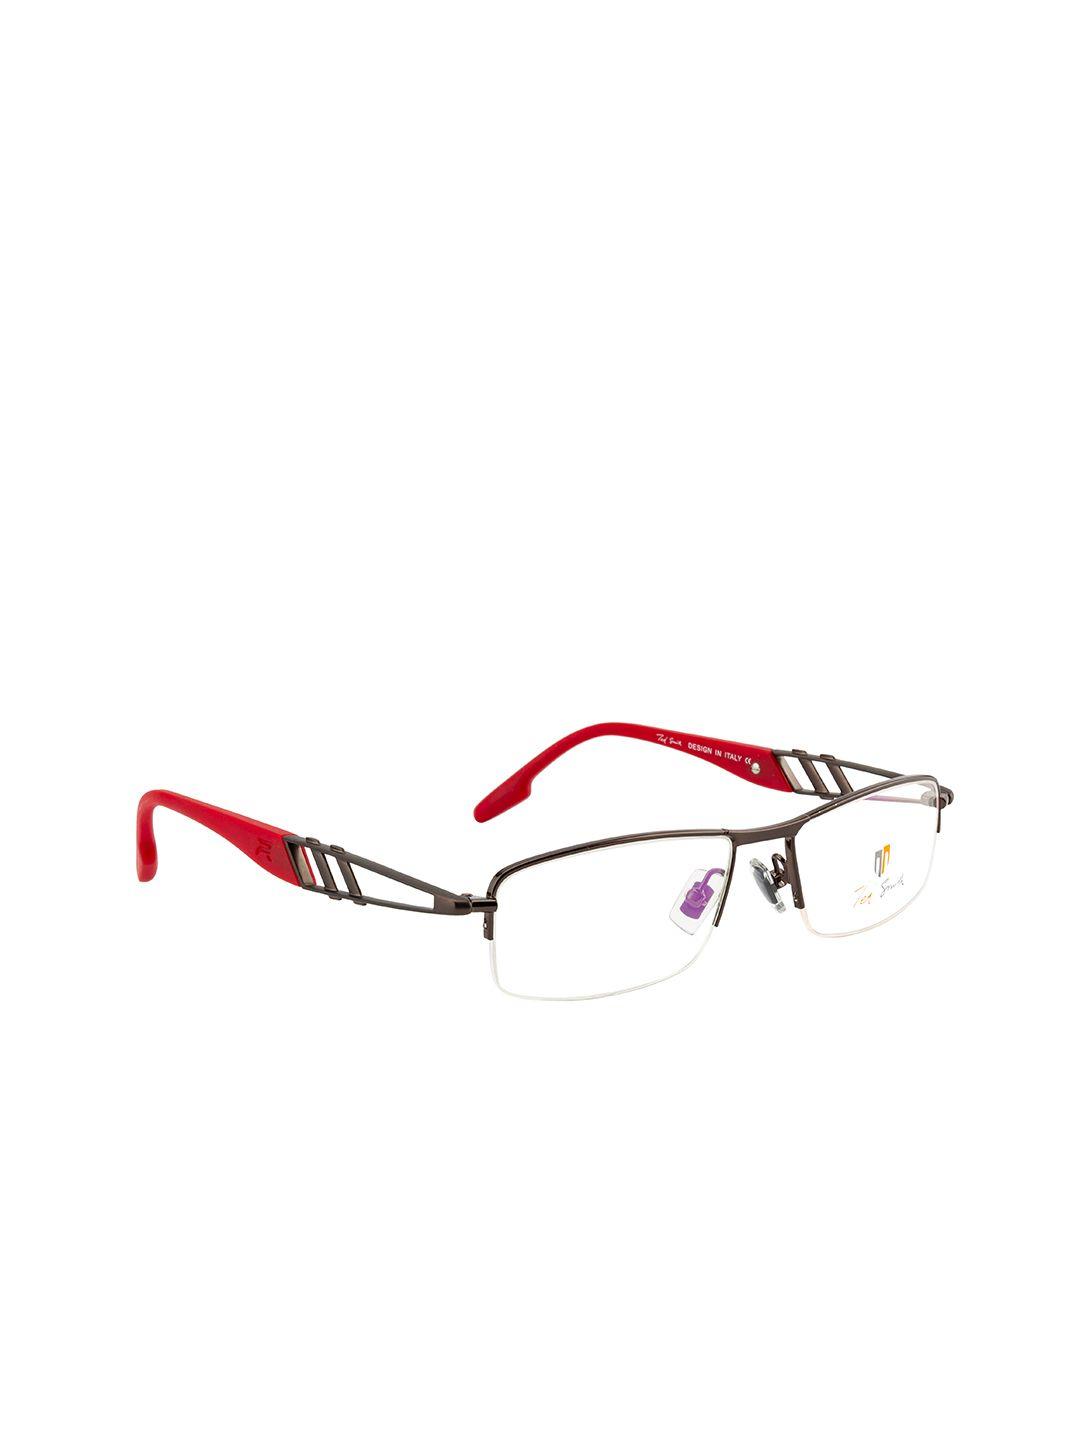 ted smith unisex brown & red half rim rectangle frames eyeglasses